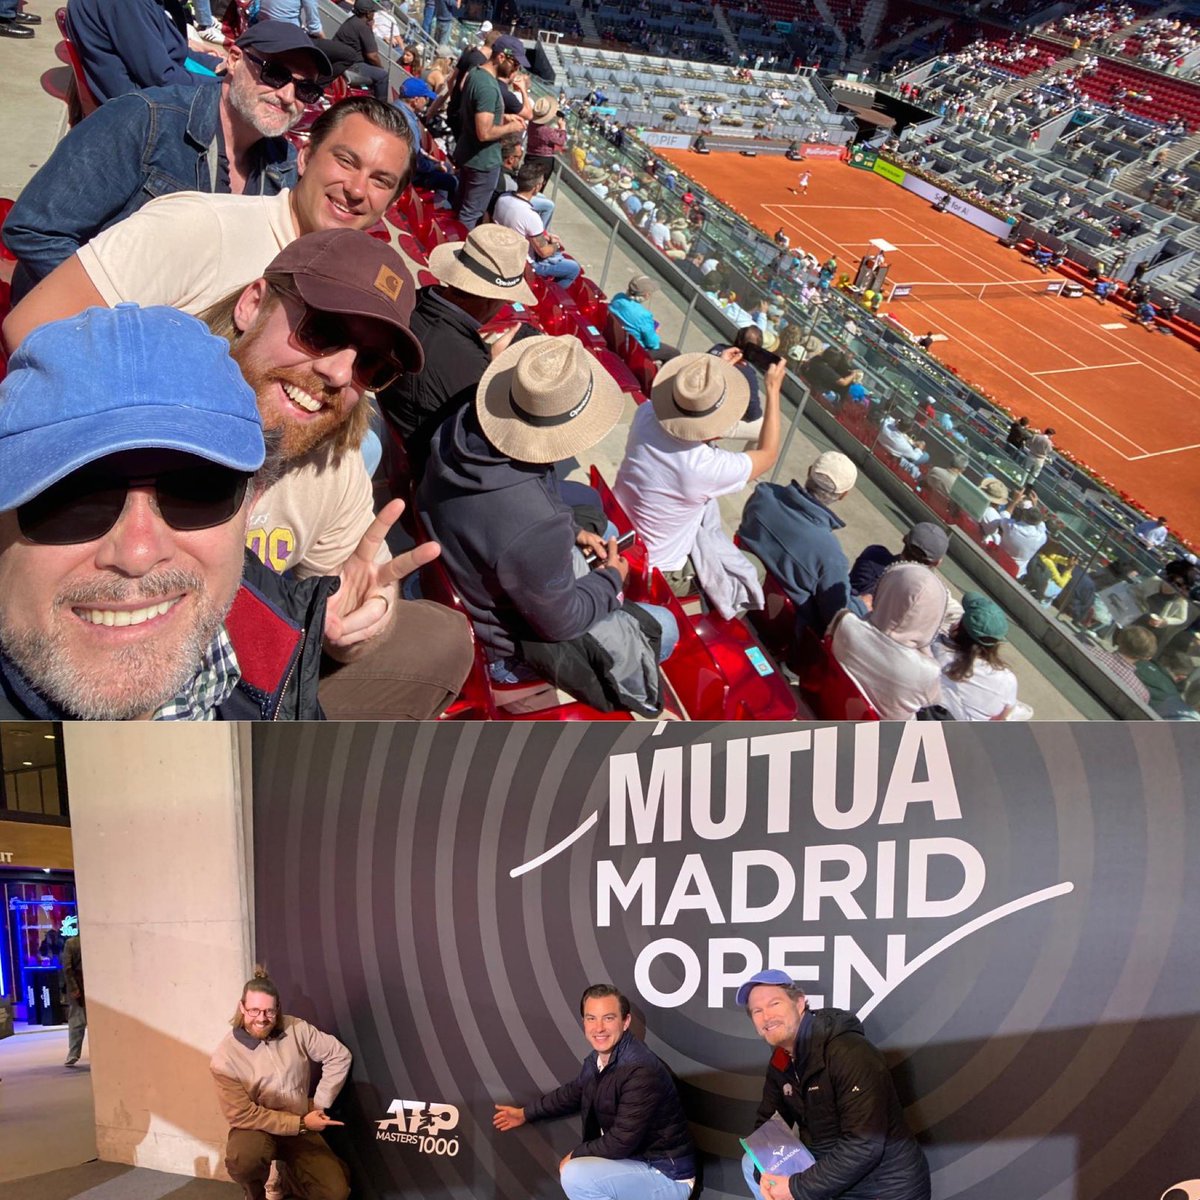 Madrid Masters at the Madrid Masters! #DieMeistersinger @Teatro_Real #LosmaestroscantoresdeNúremberg @atptour @RafaelNadal @BarnabyRea #FredericJost #JoséAntonioLópez